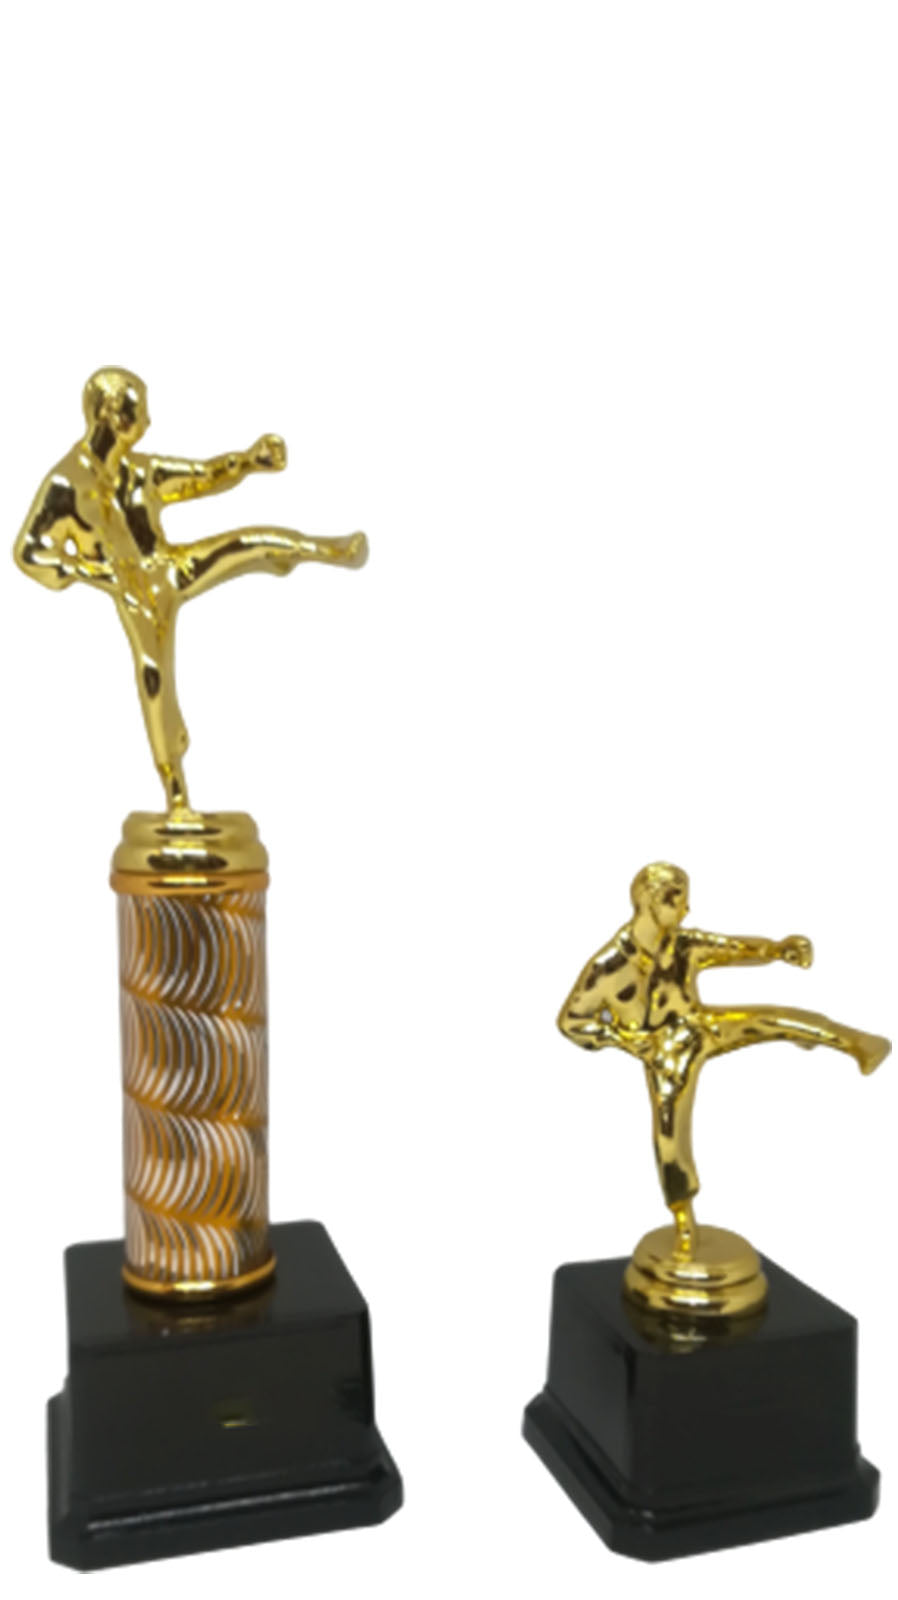 S12 - Karate/Taekwando Figurine Trophy